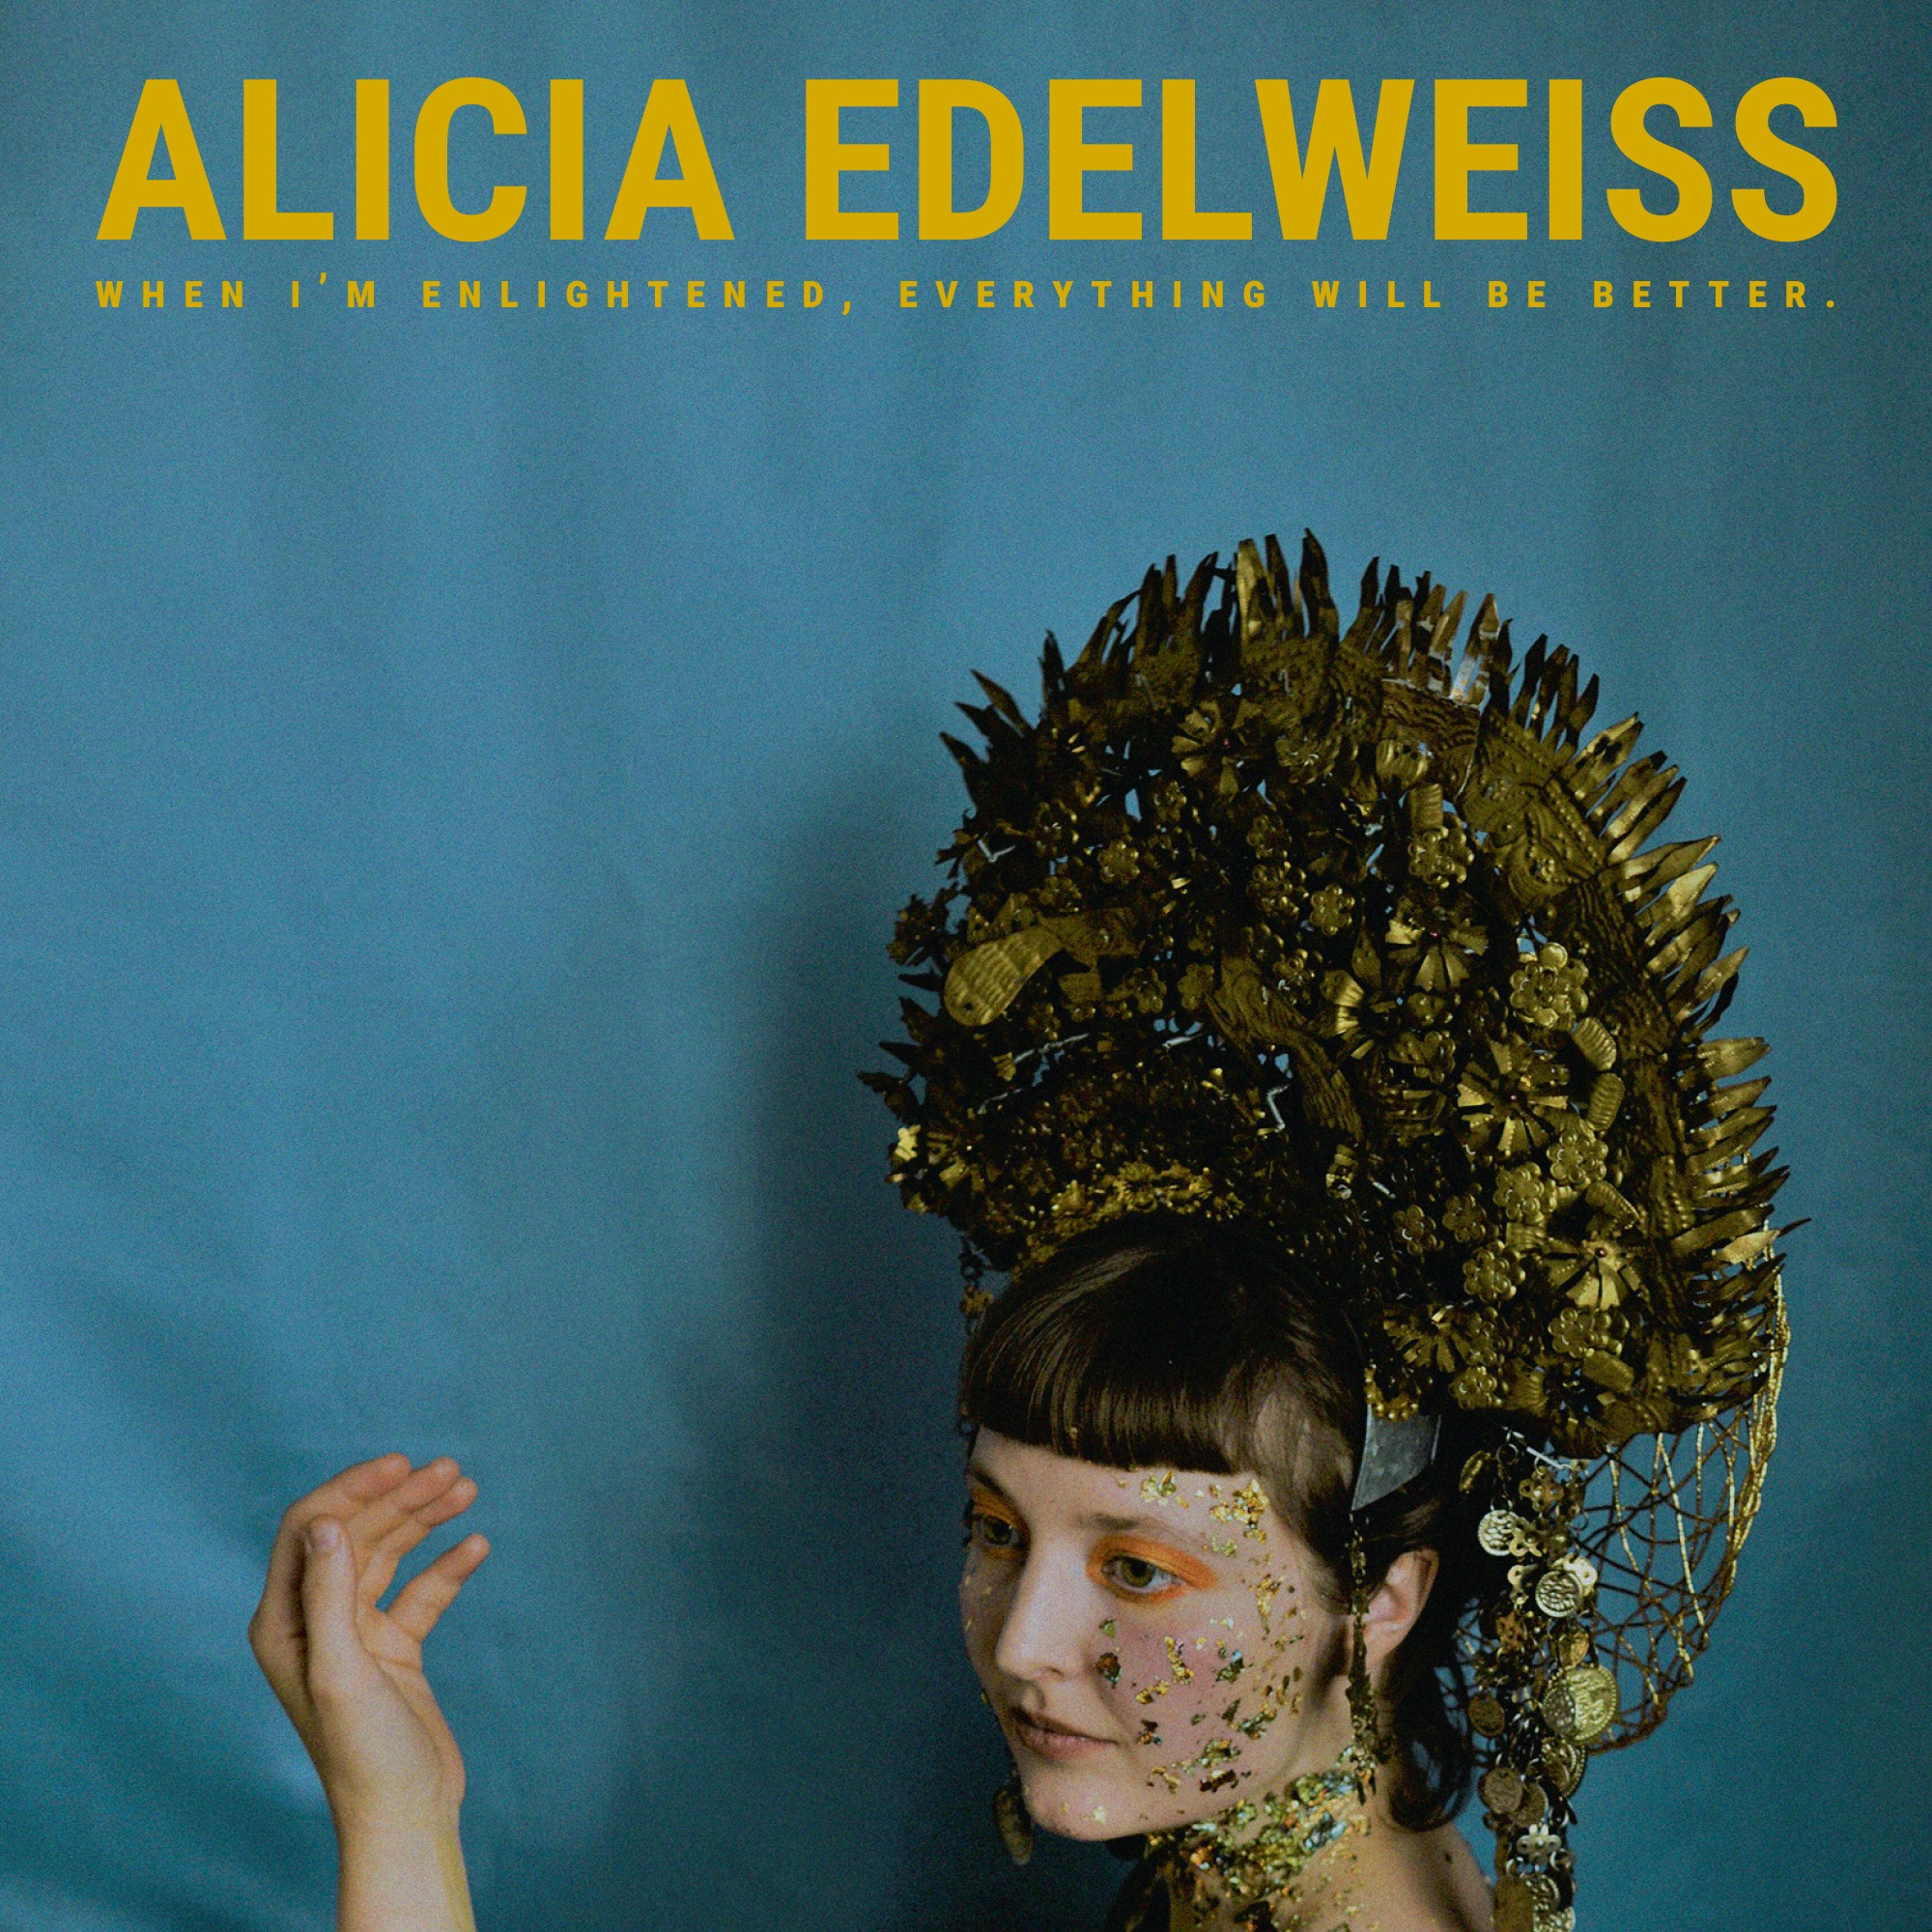 Alicia Edelweiss